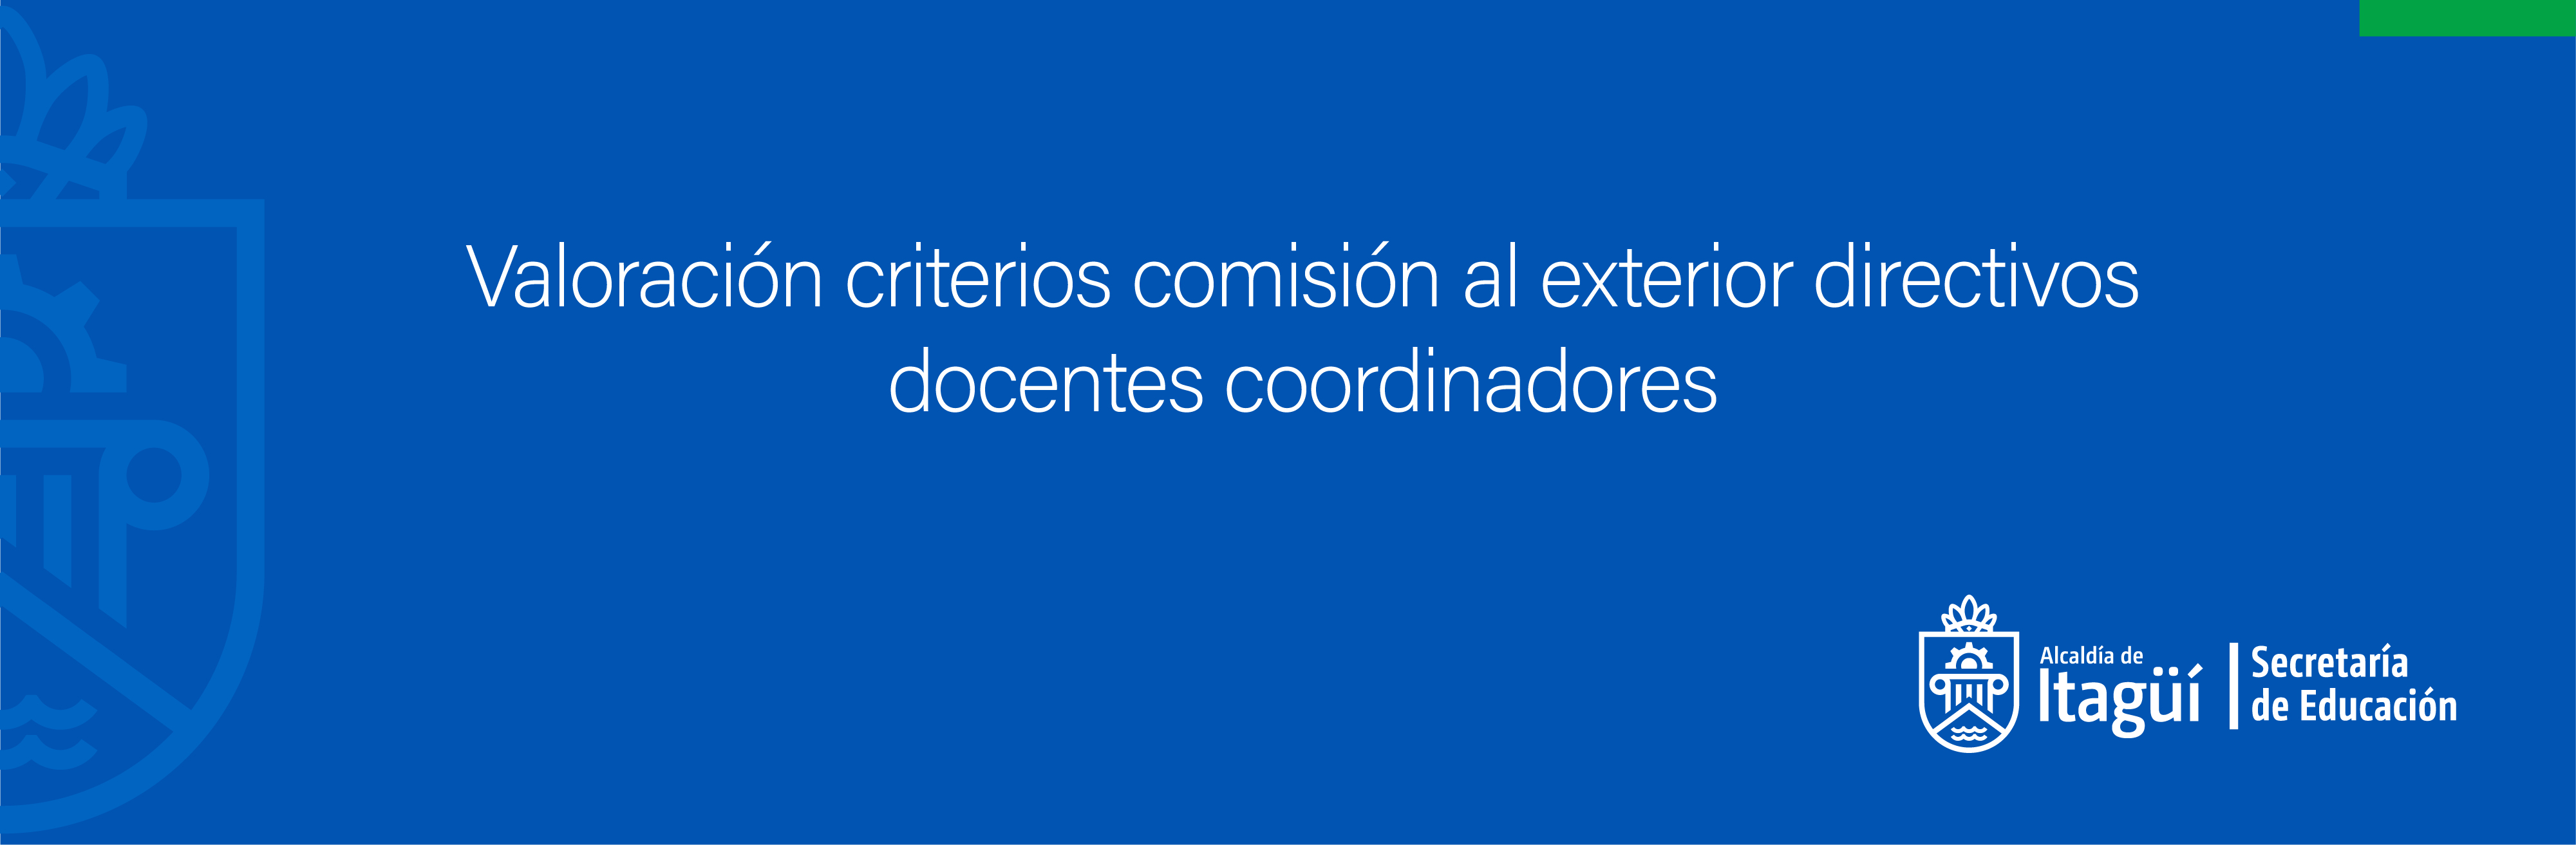 Valoración criterios comisión al exterior directivos docentes coordinadores.